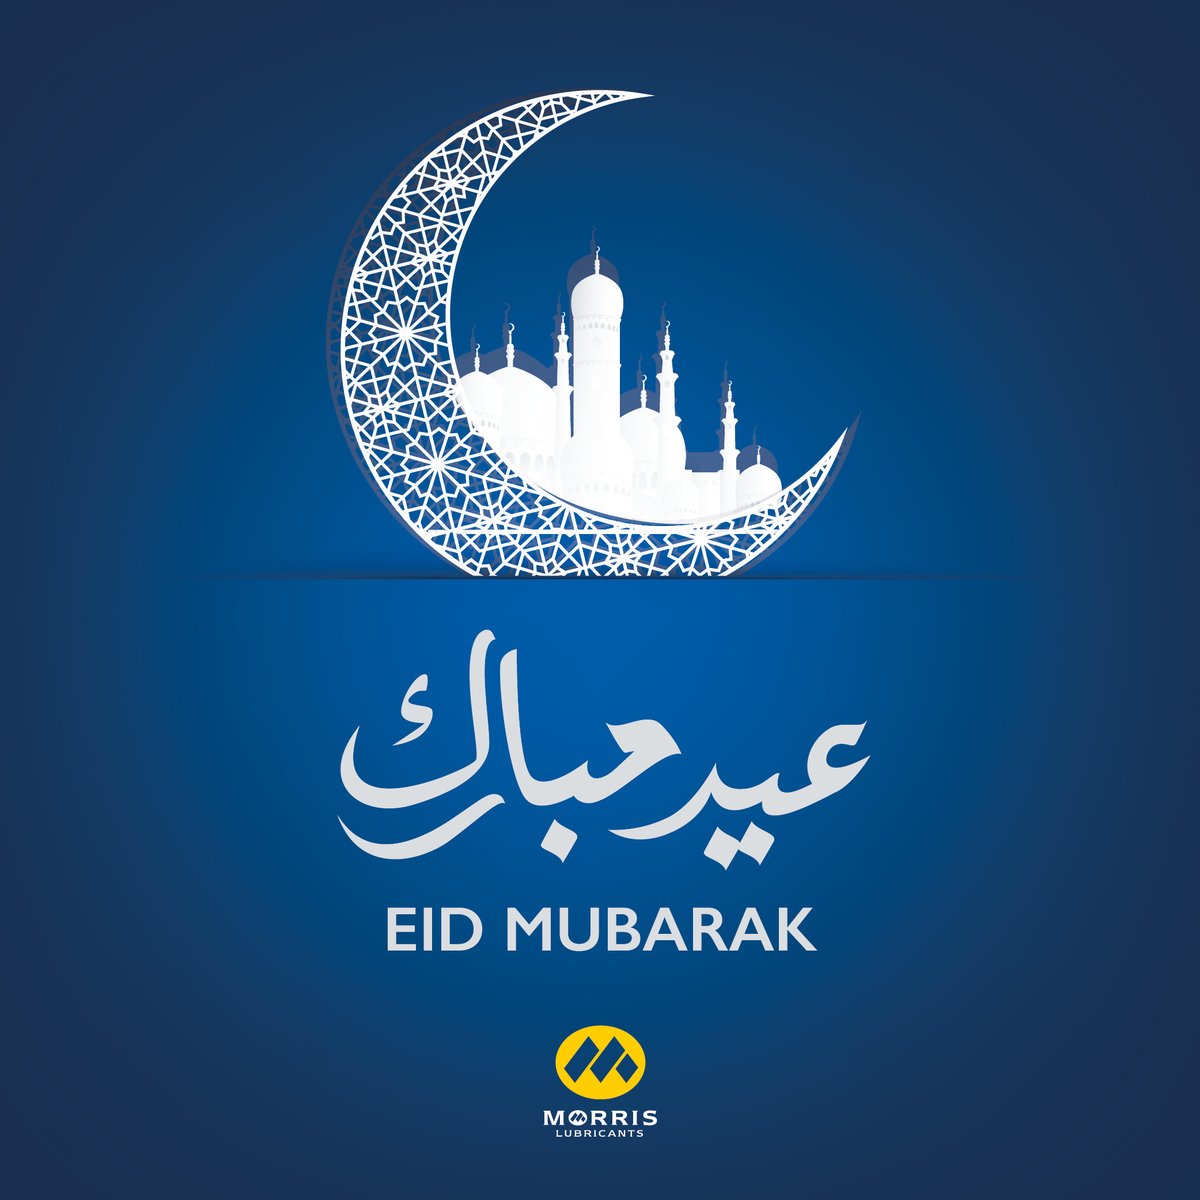 @Morrisoil would like to wish a blessed and happy Eid Mubarak 🌙 to everyone celebrating Eid Al Fitr. #EidMubarak #EidAlFitr